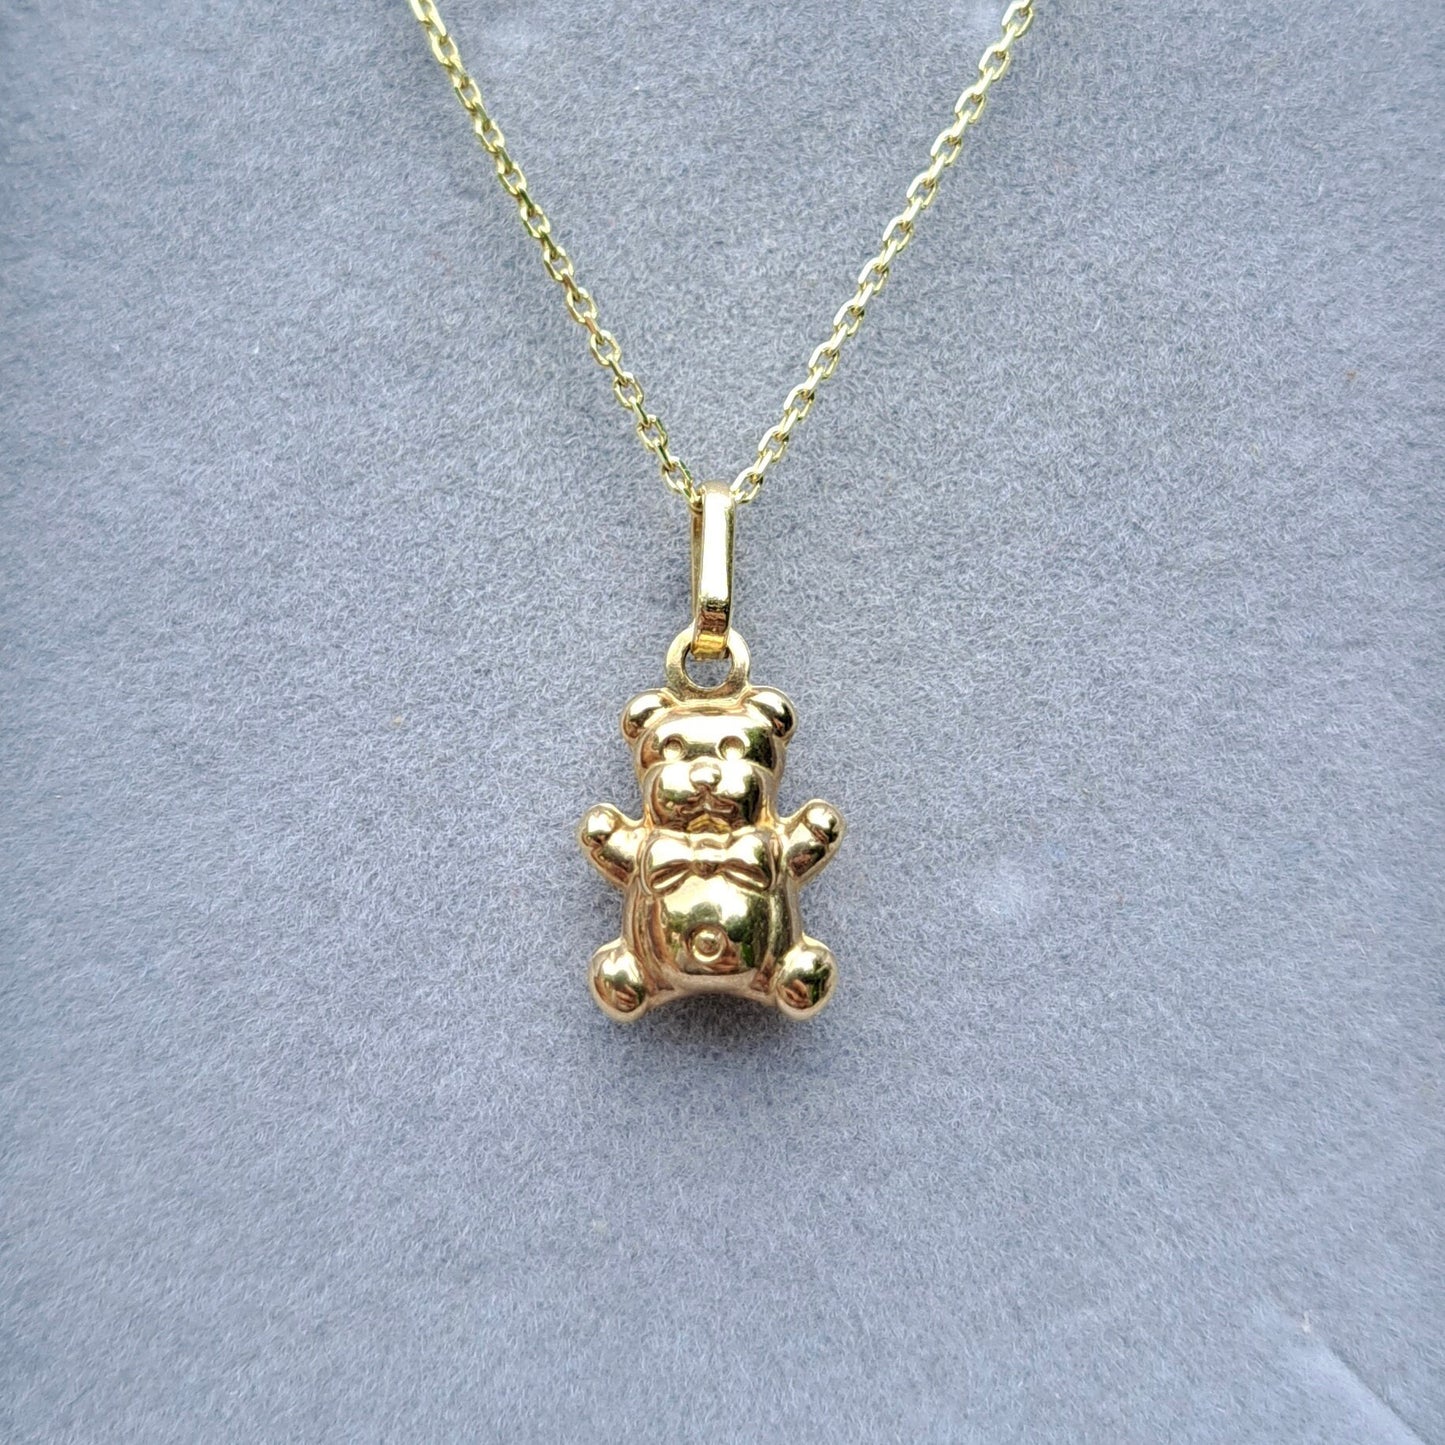 Mini 9ct Gold Puffy Teddy Bear Charm / Pendant